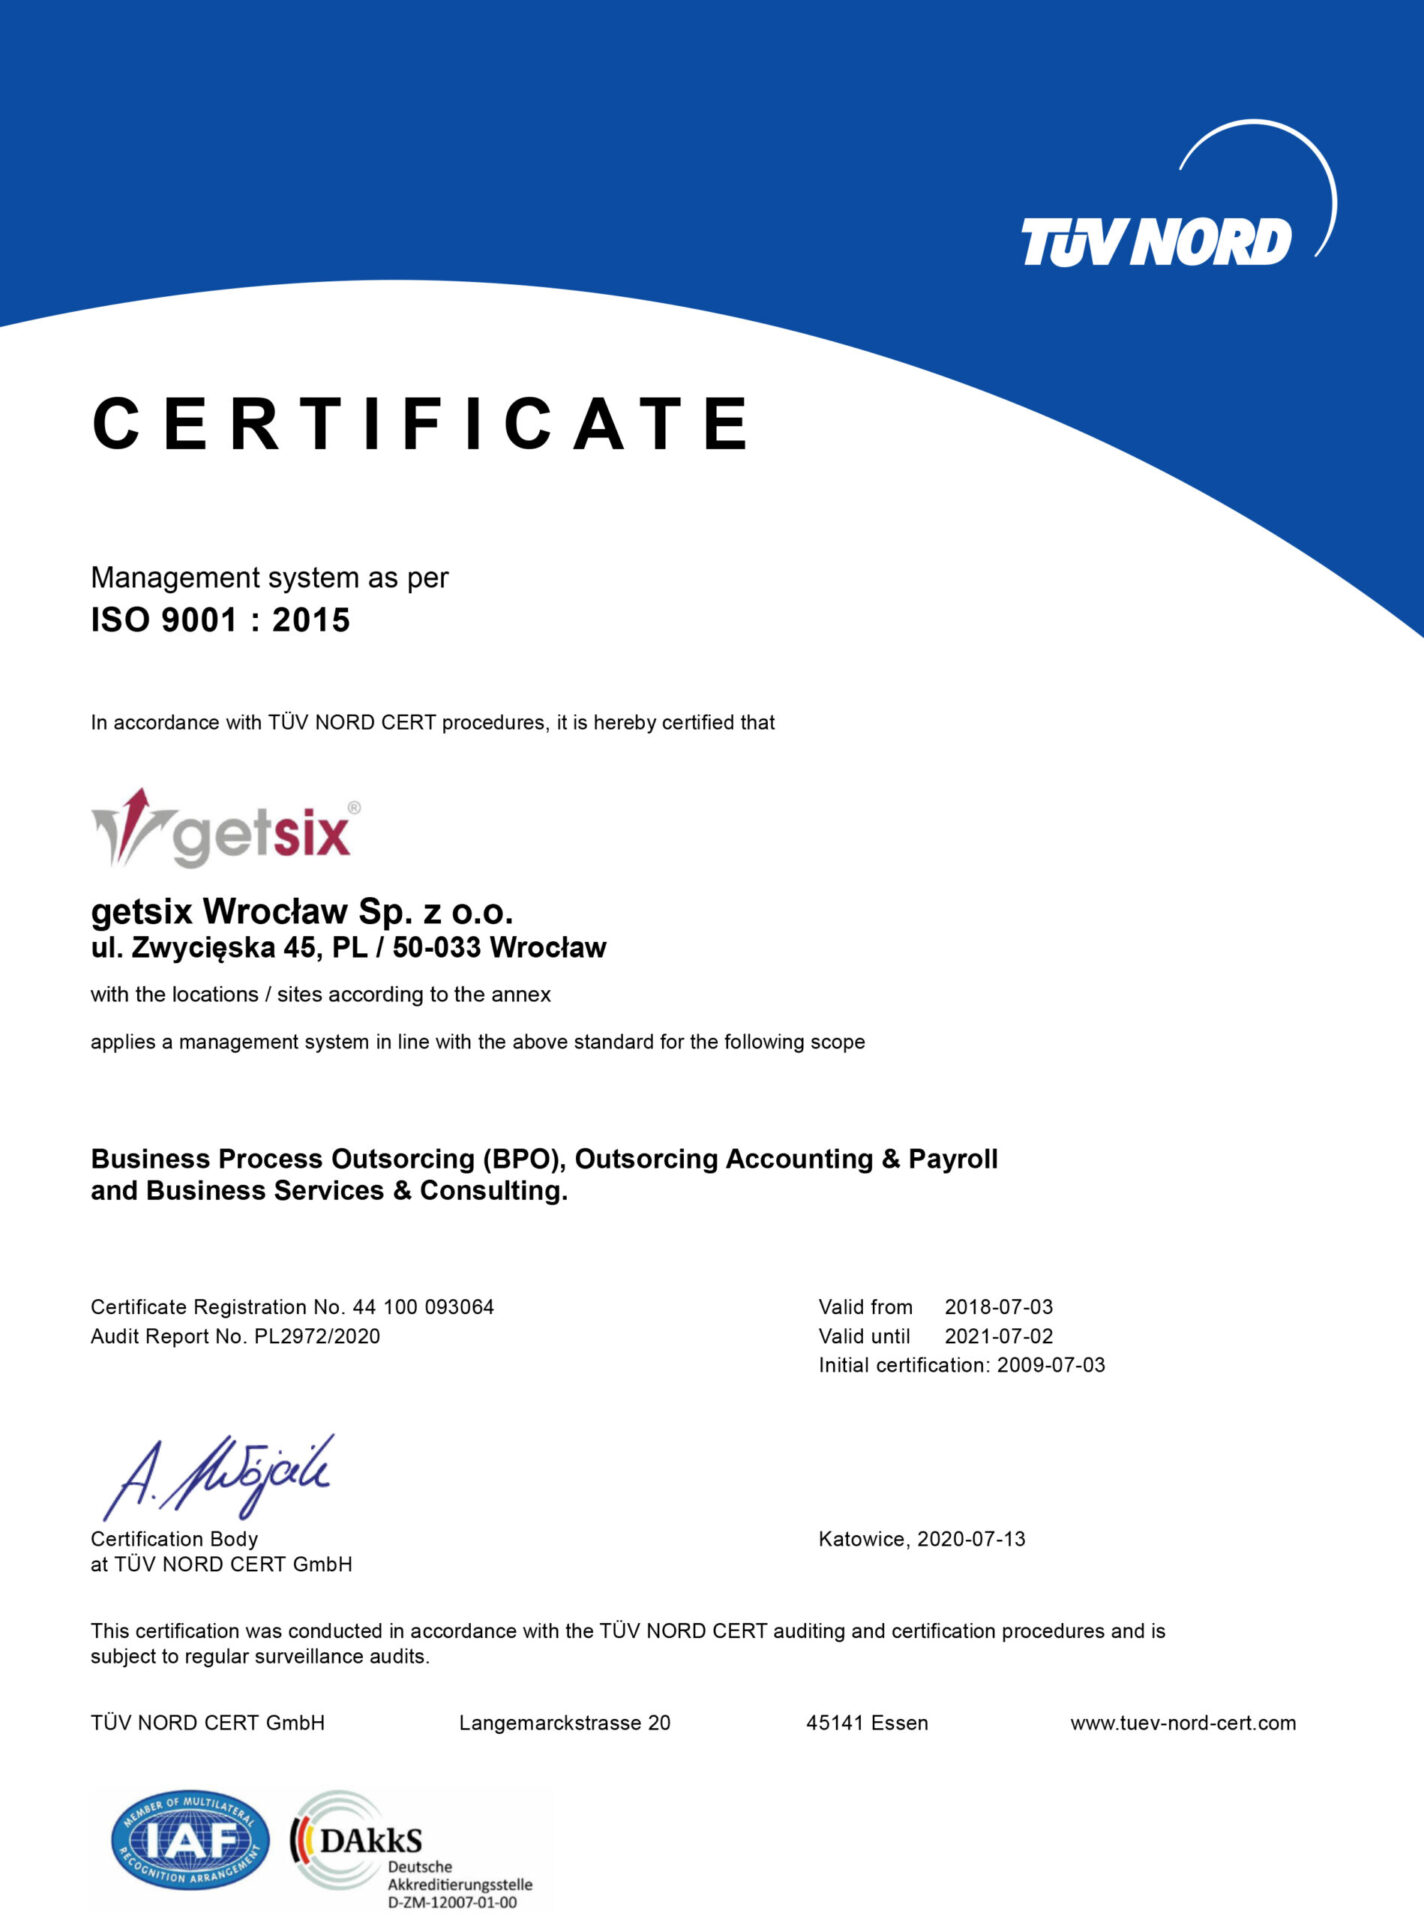 getsix Wrocław ISO 9001 Certificate